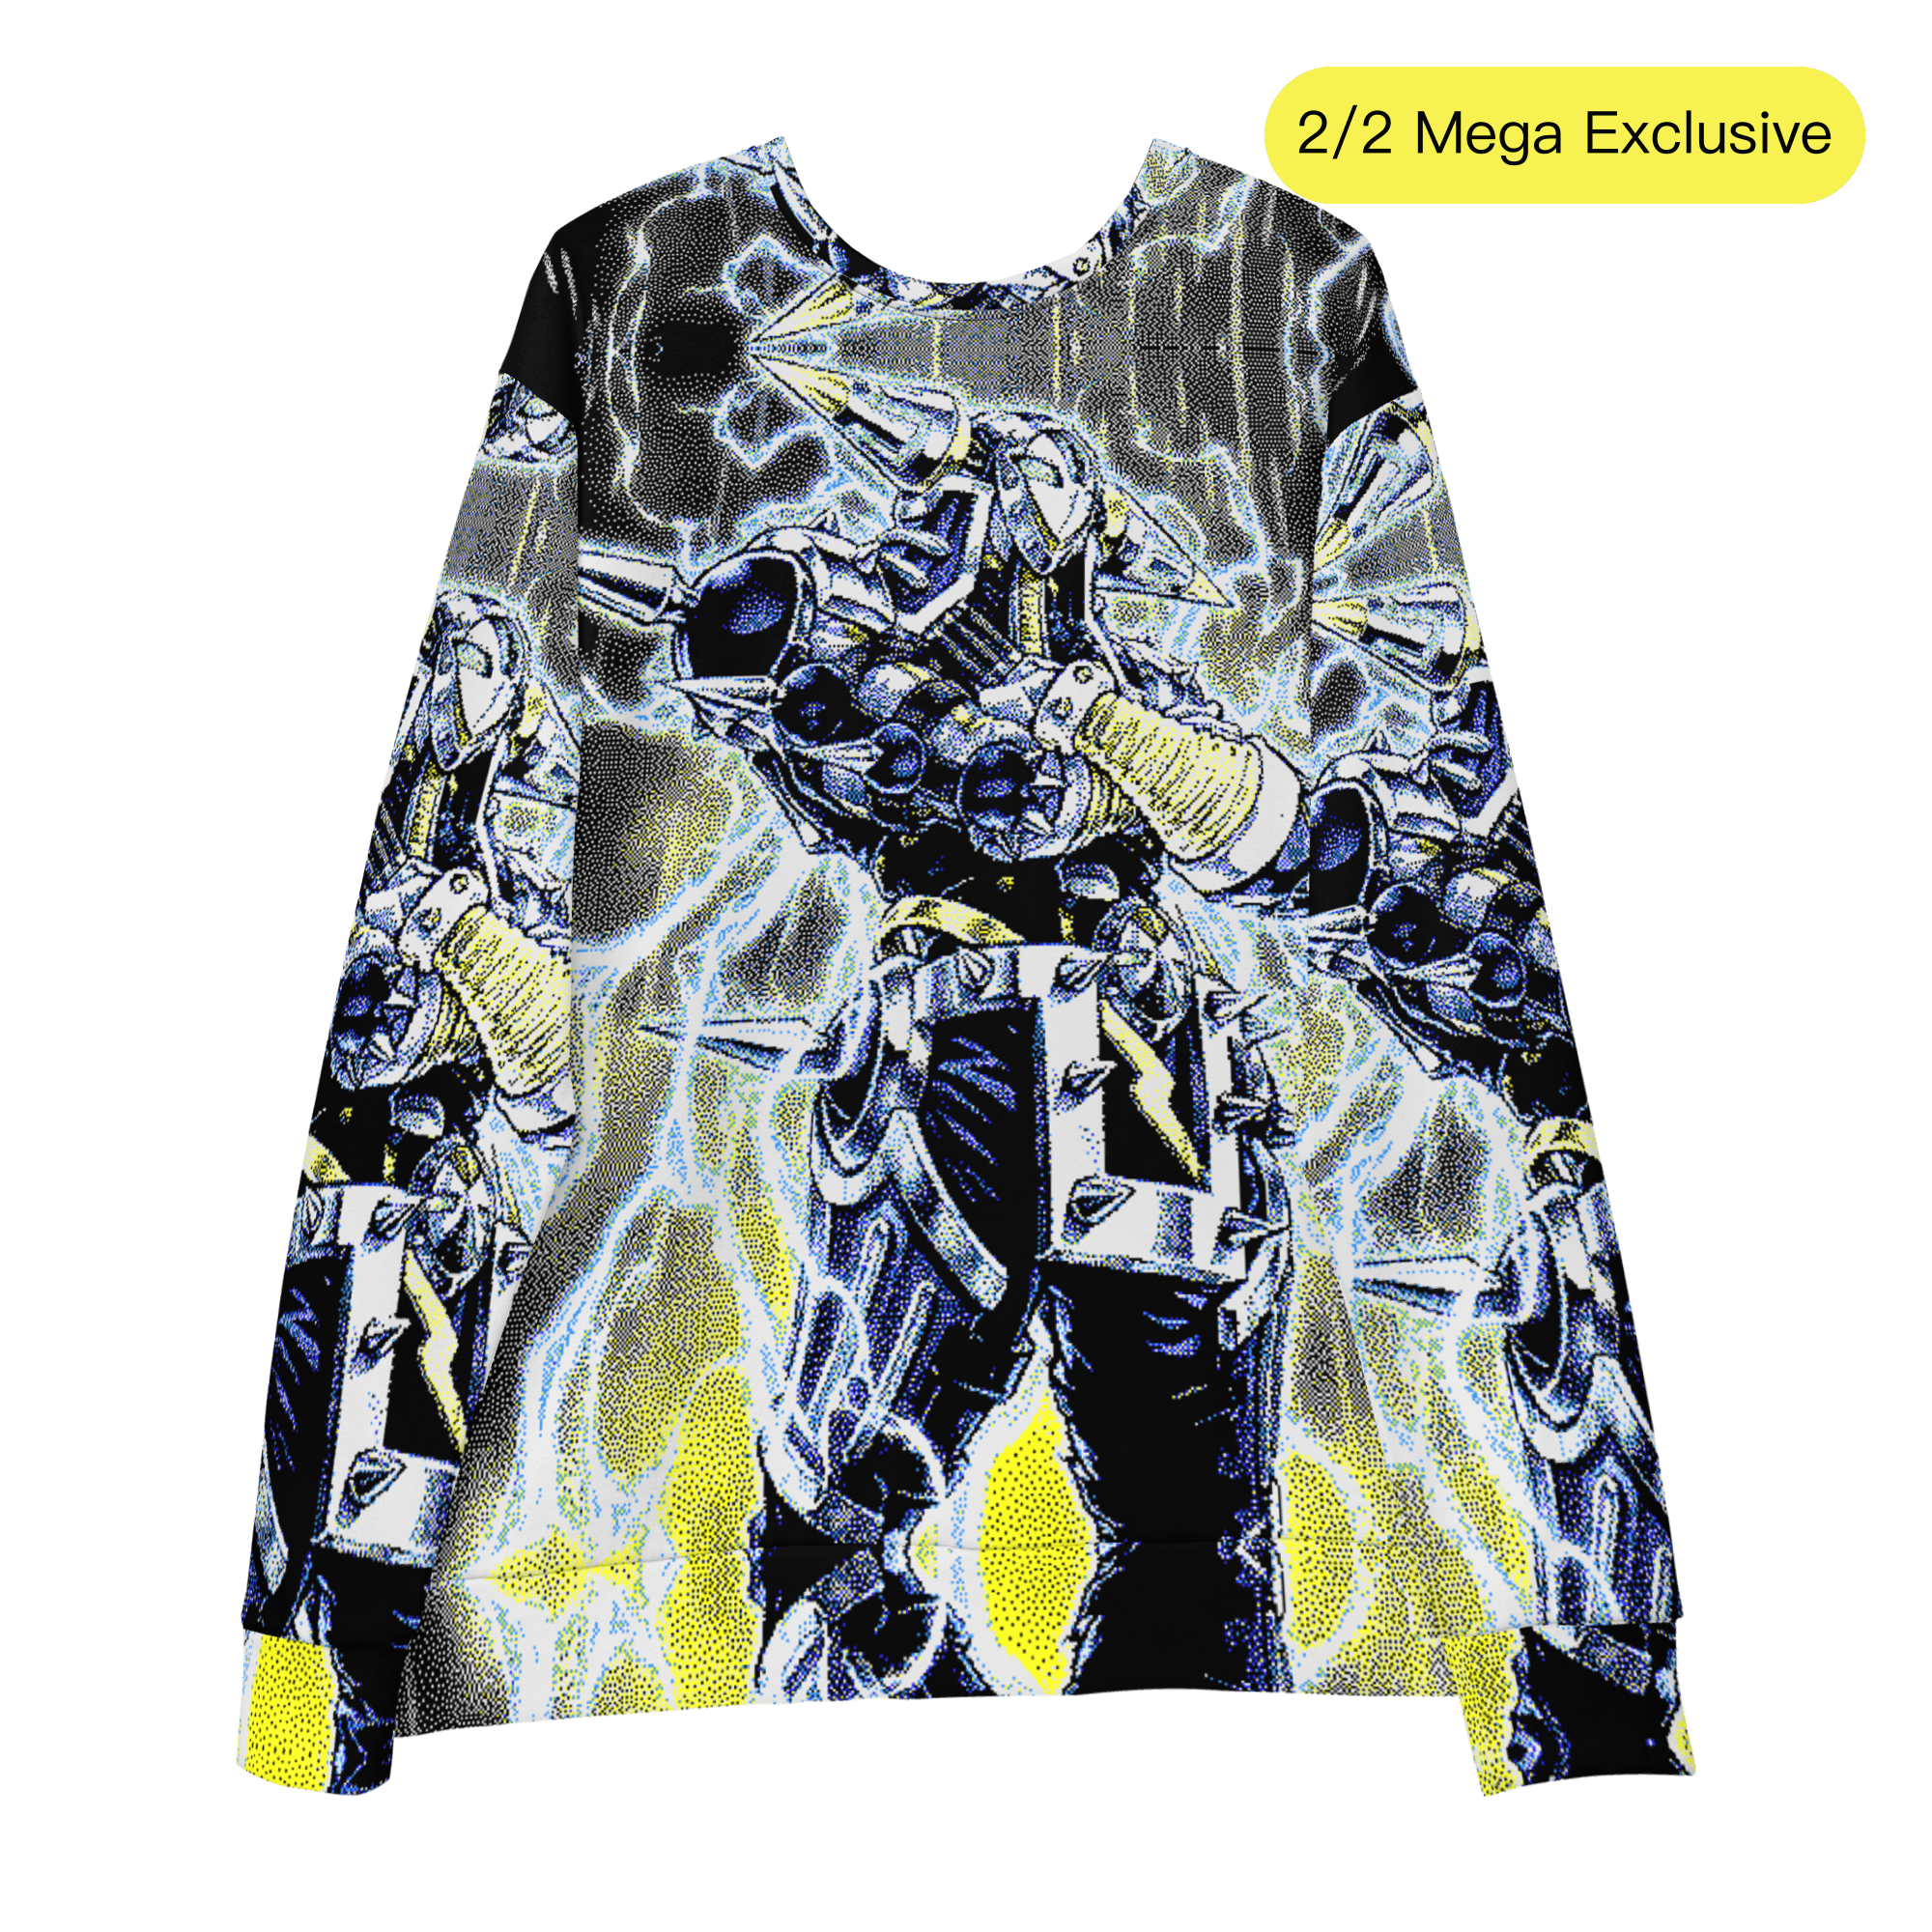 Warri0r X® Deluxe Light Sweatshirt (2 pieces only 2/2) - Kikillo Club